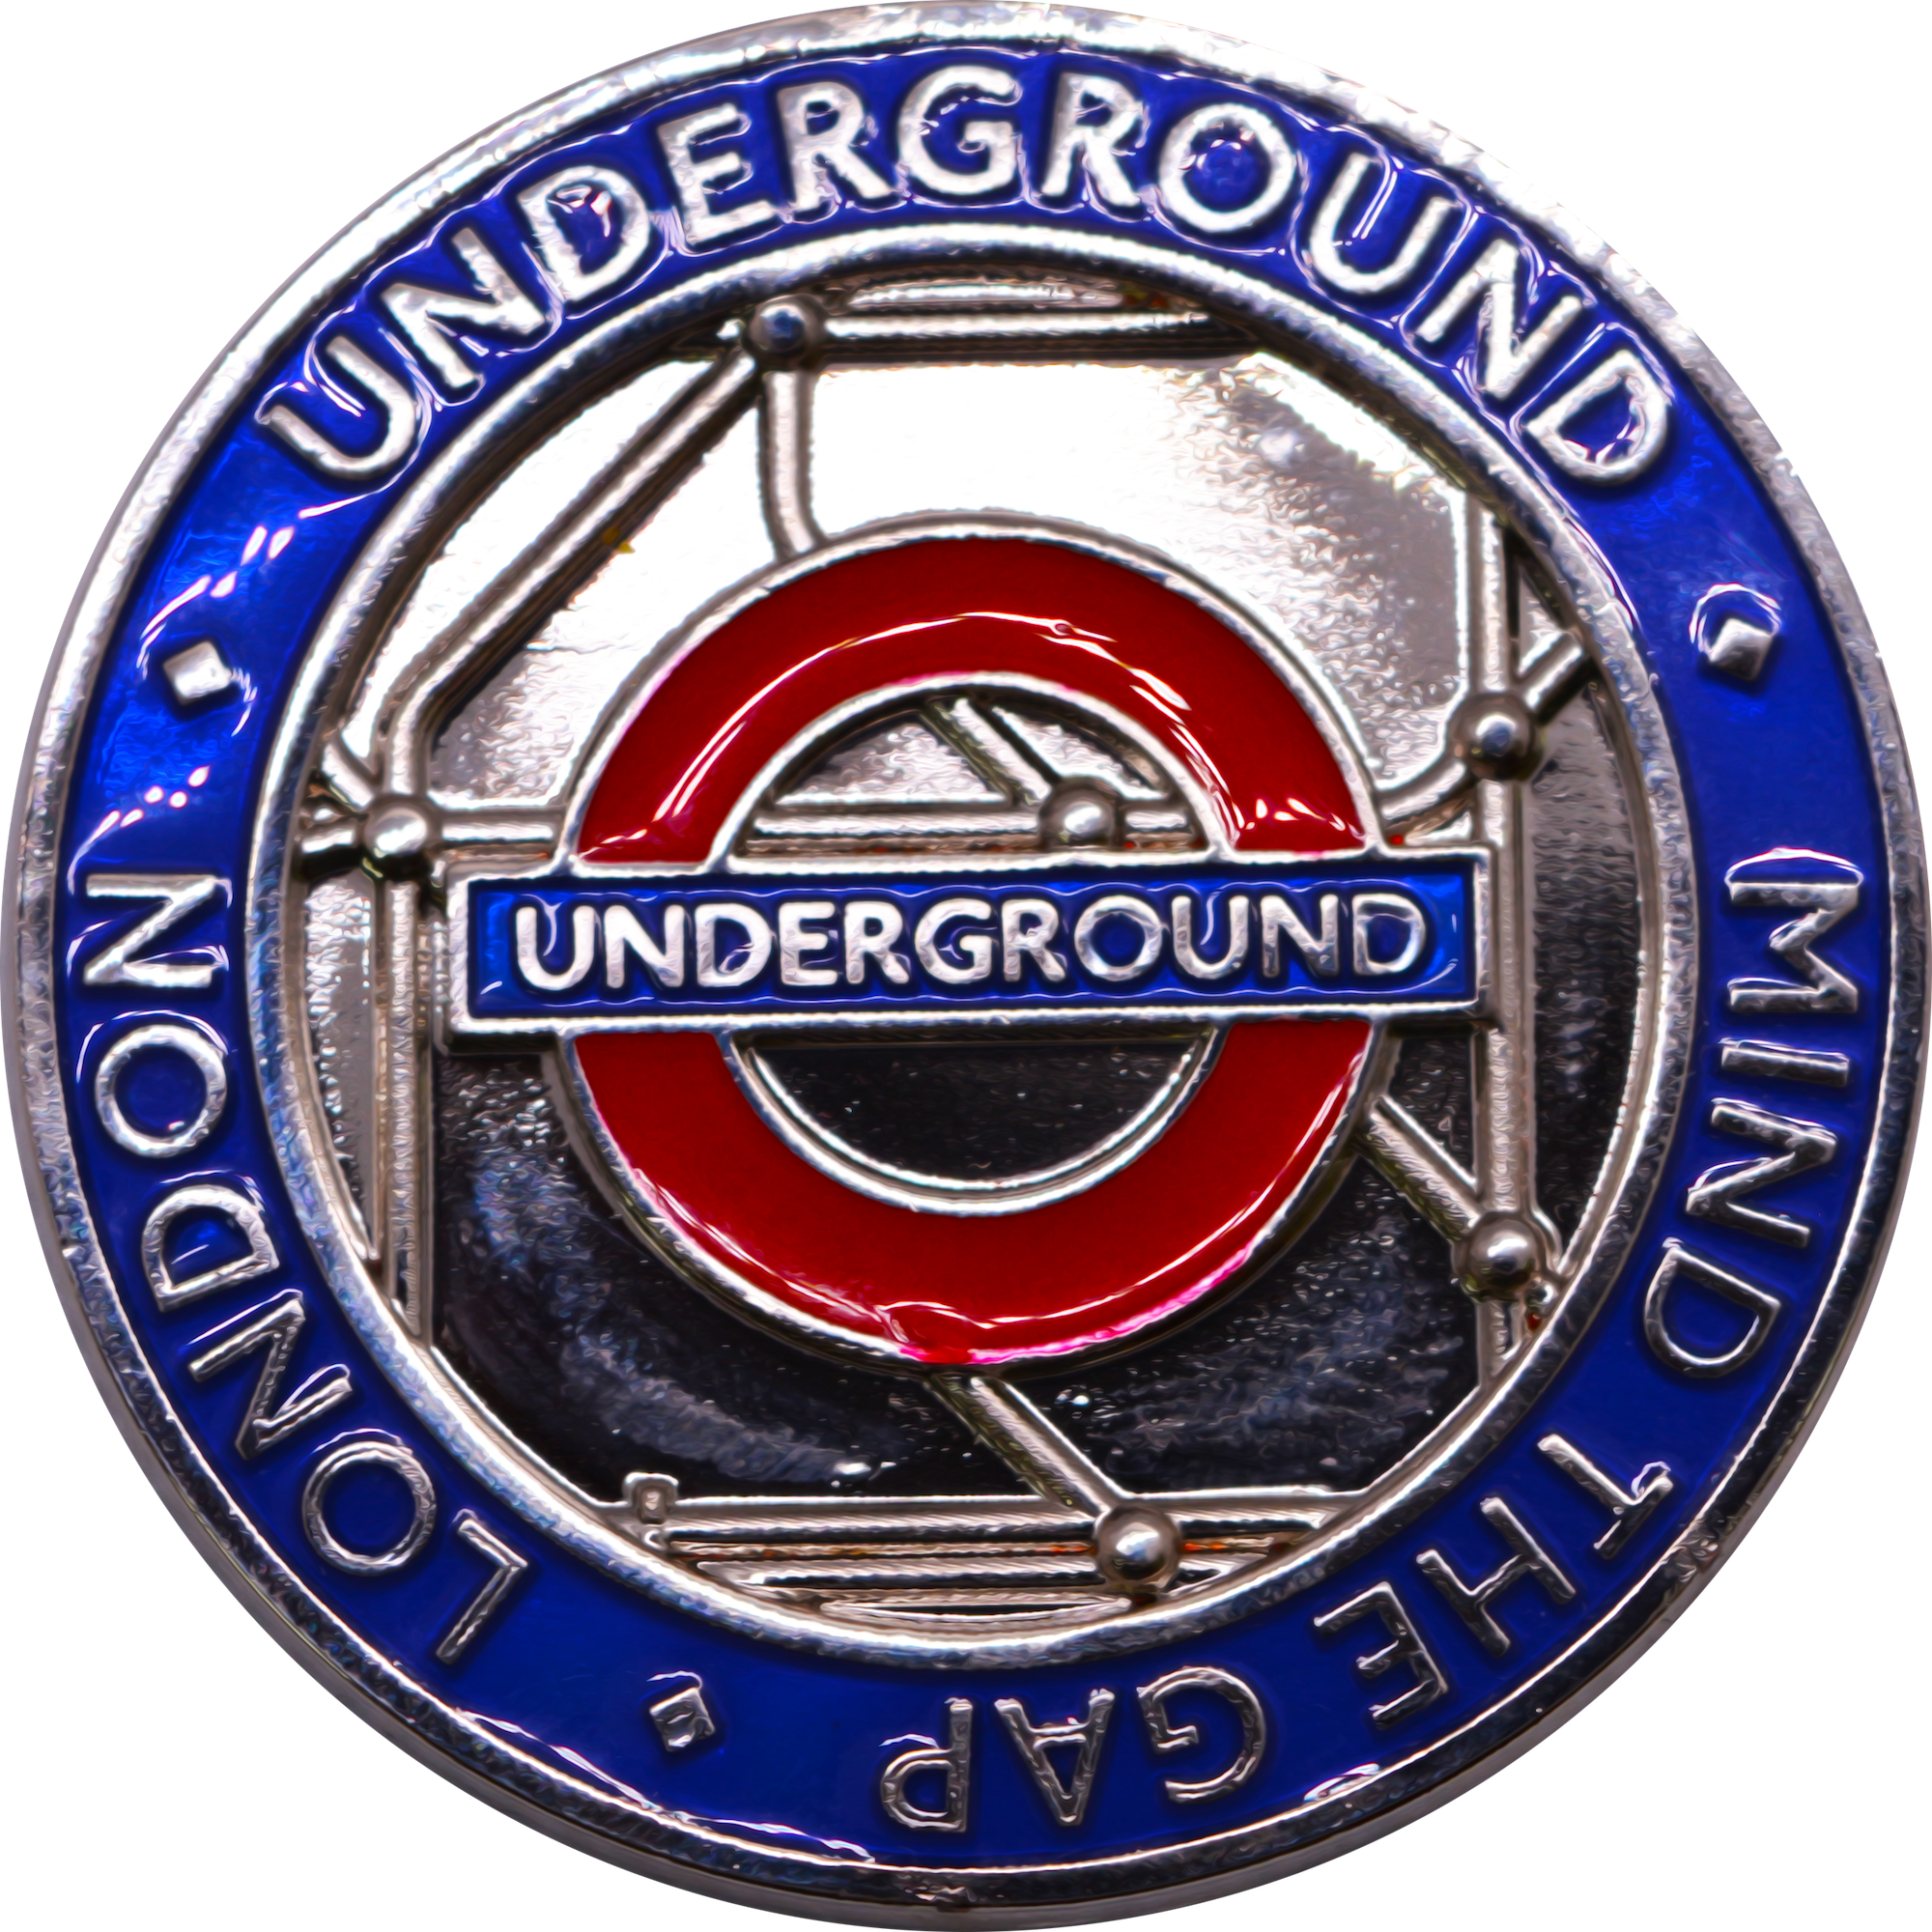 Licensed London Underground Coin Shaped Fridge Magnet 4 Styles Underground, Mind the Gap, London and train